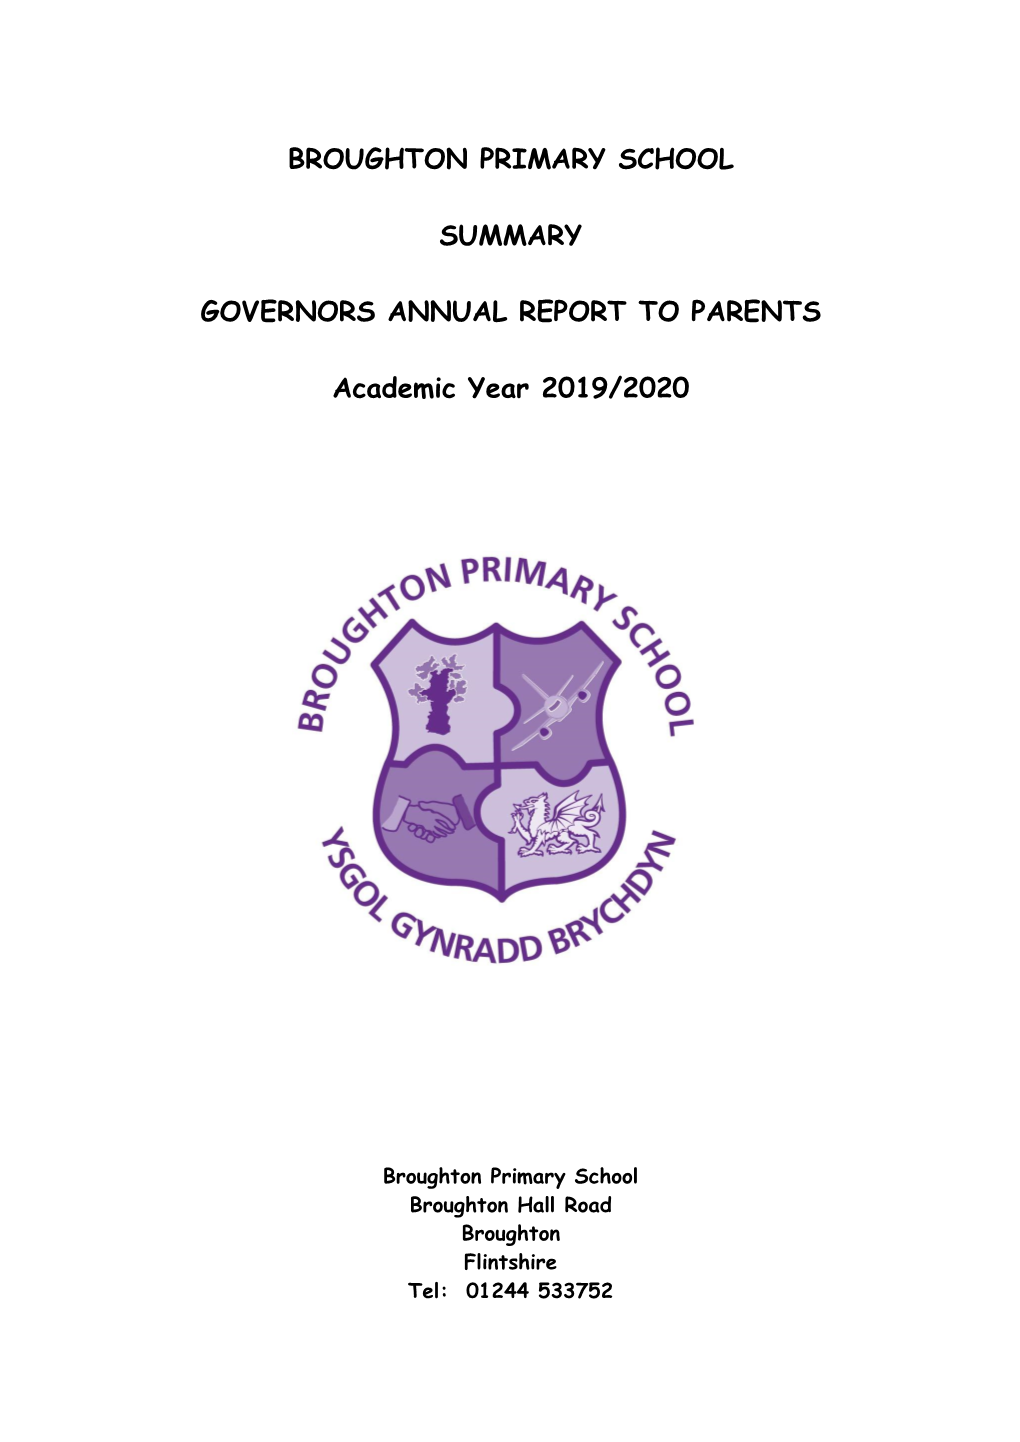 Broughton Primary School Summary Governors